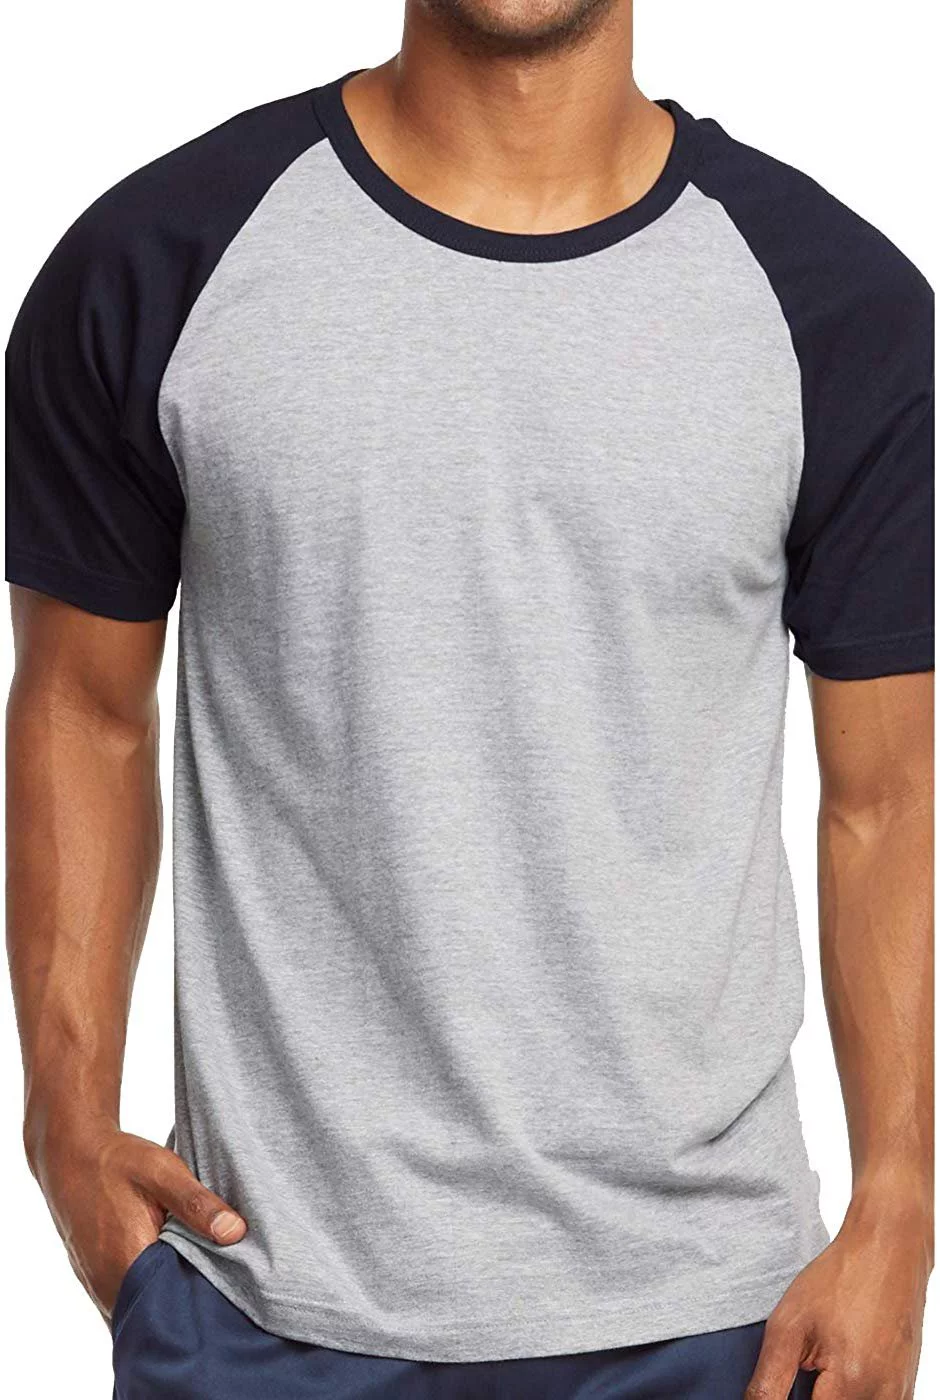 Mens Casual Short Sleeve Plain Baseball Cotton T Shirts